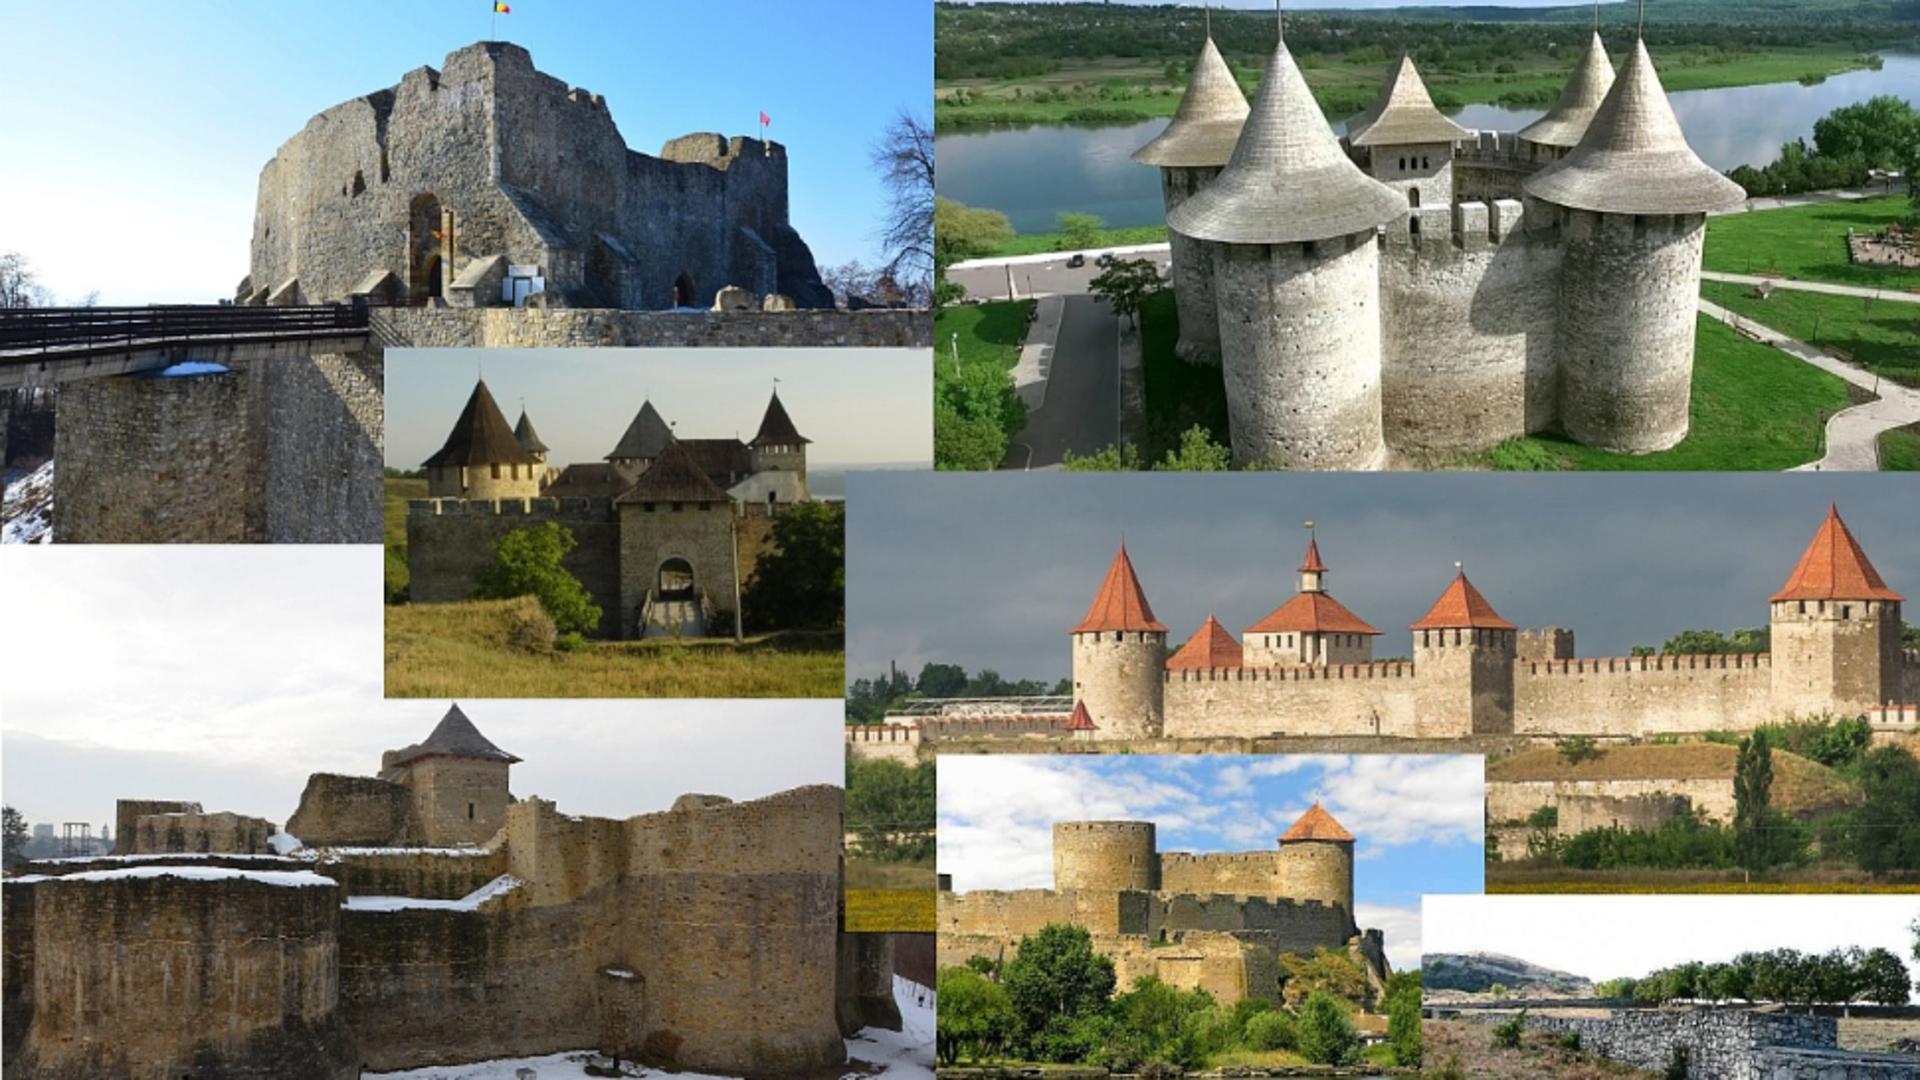 Cetăți medievale ale Moldovei (sursă: hailaplimbare.ro)